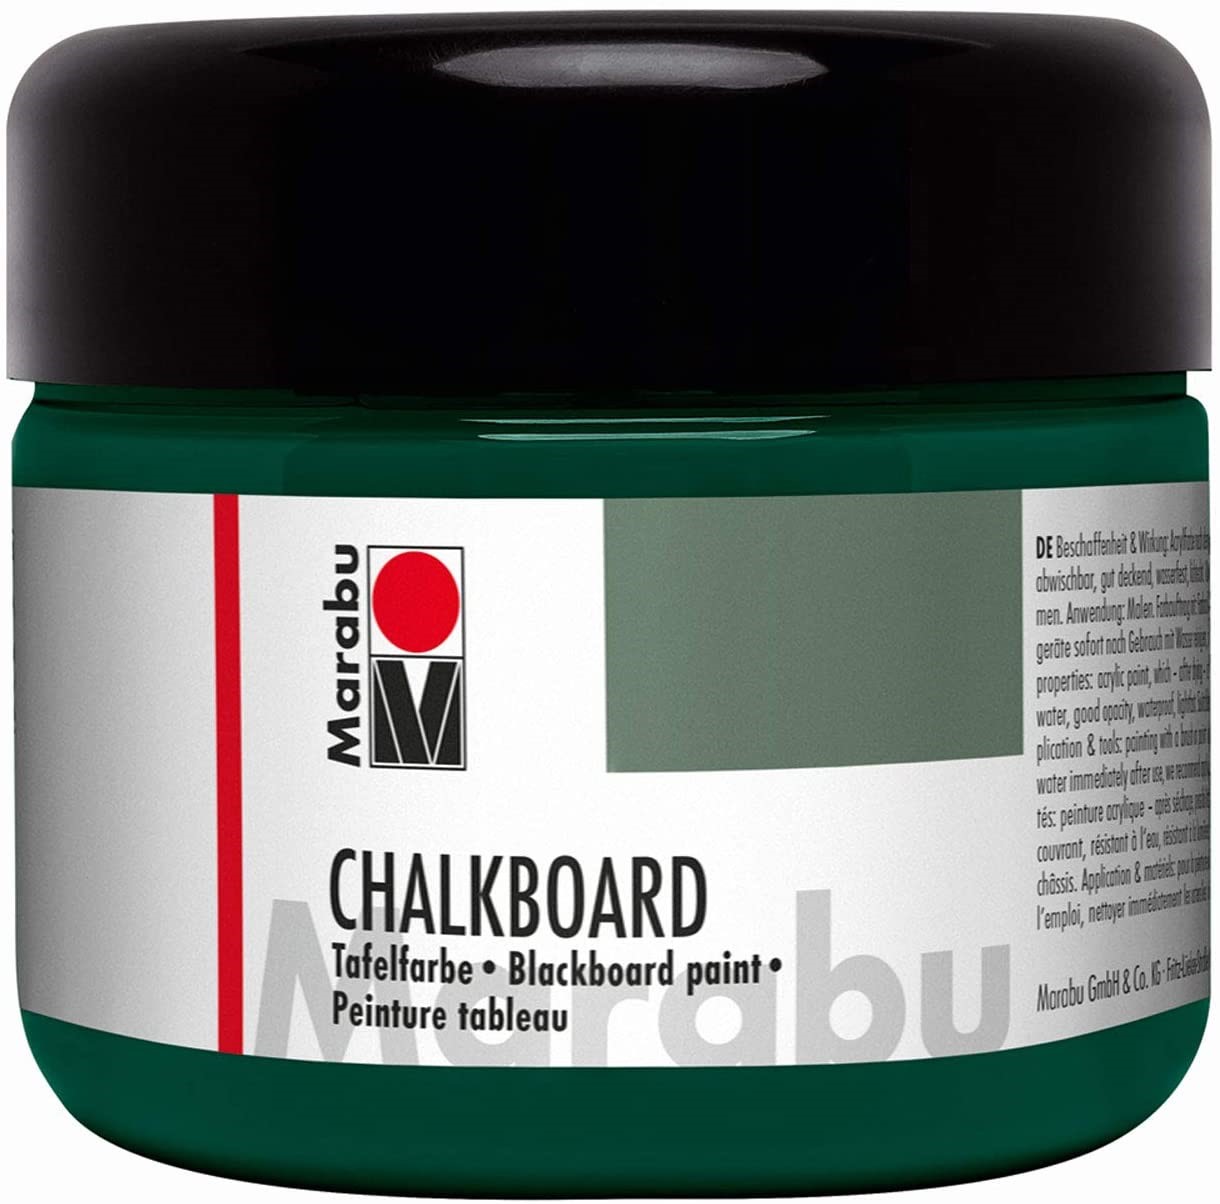 Marabu CHALKBOARD Tafelfarbe, Tafel Grn 868, 225 ml